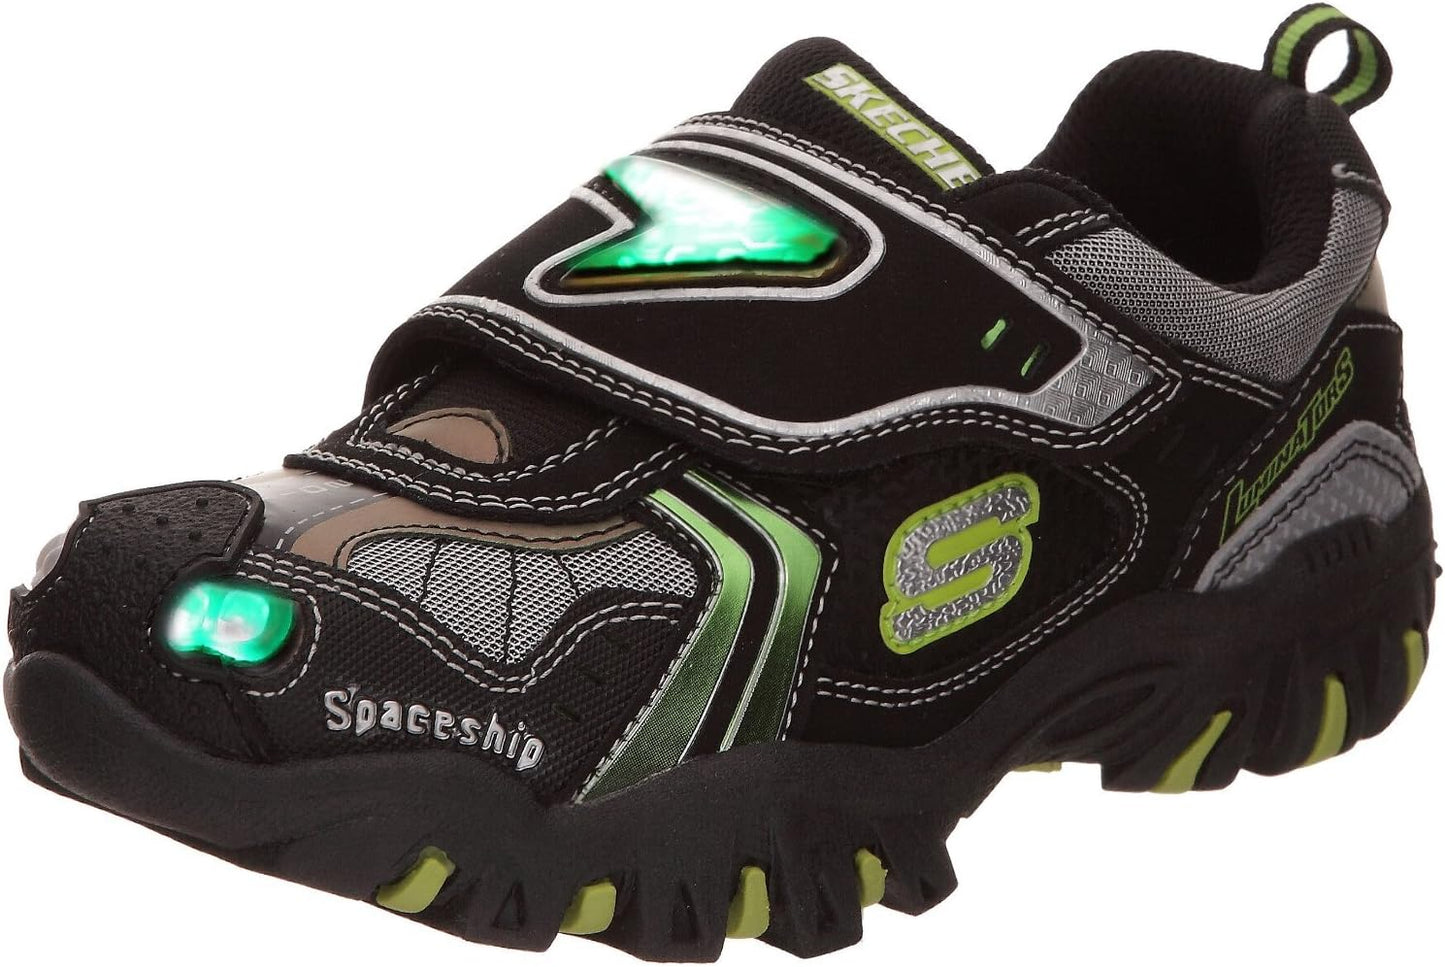 Skechers Damager Spaceship Sneaker Black/Lime Size Little Kids US 2.5 | EU 34